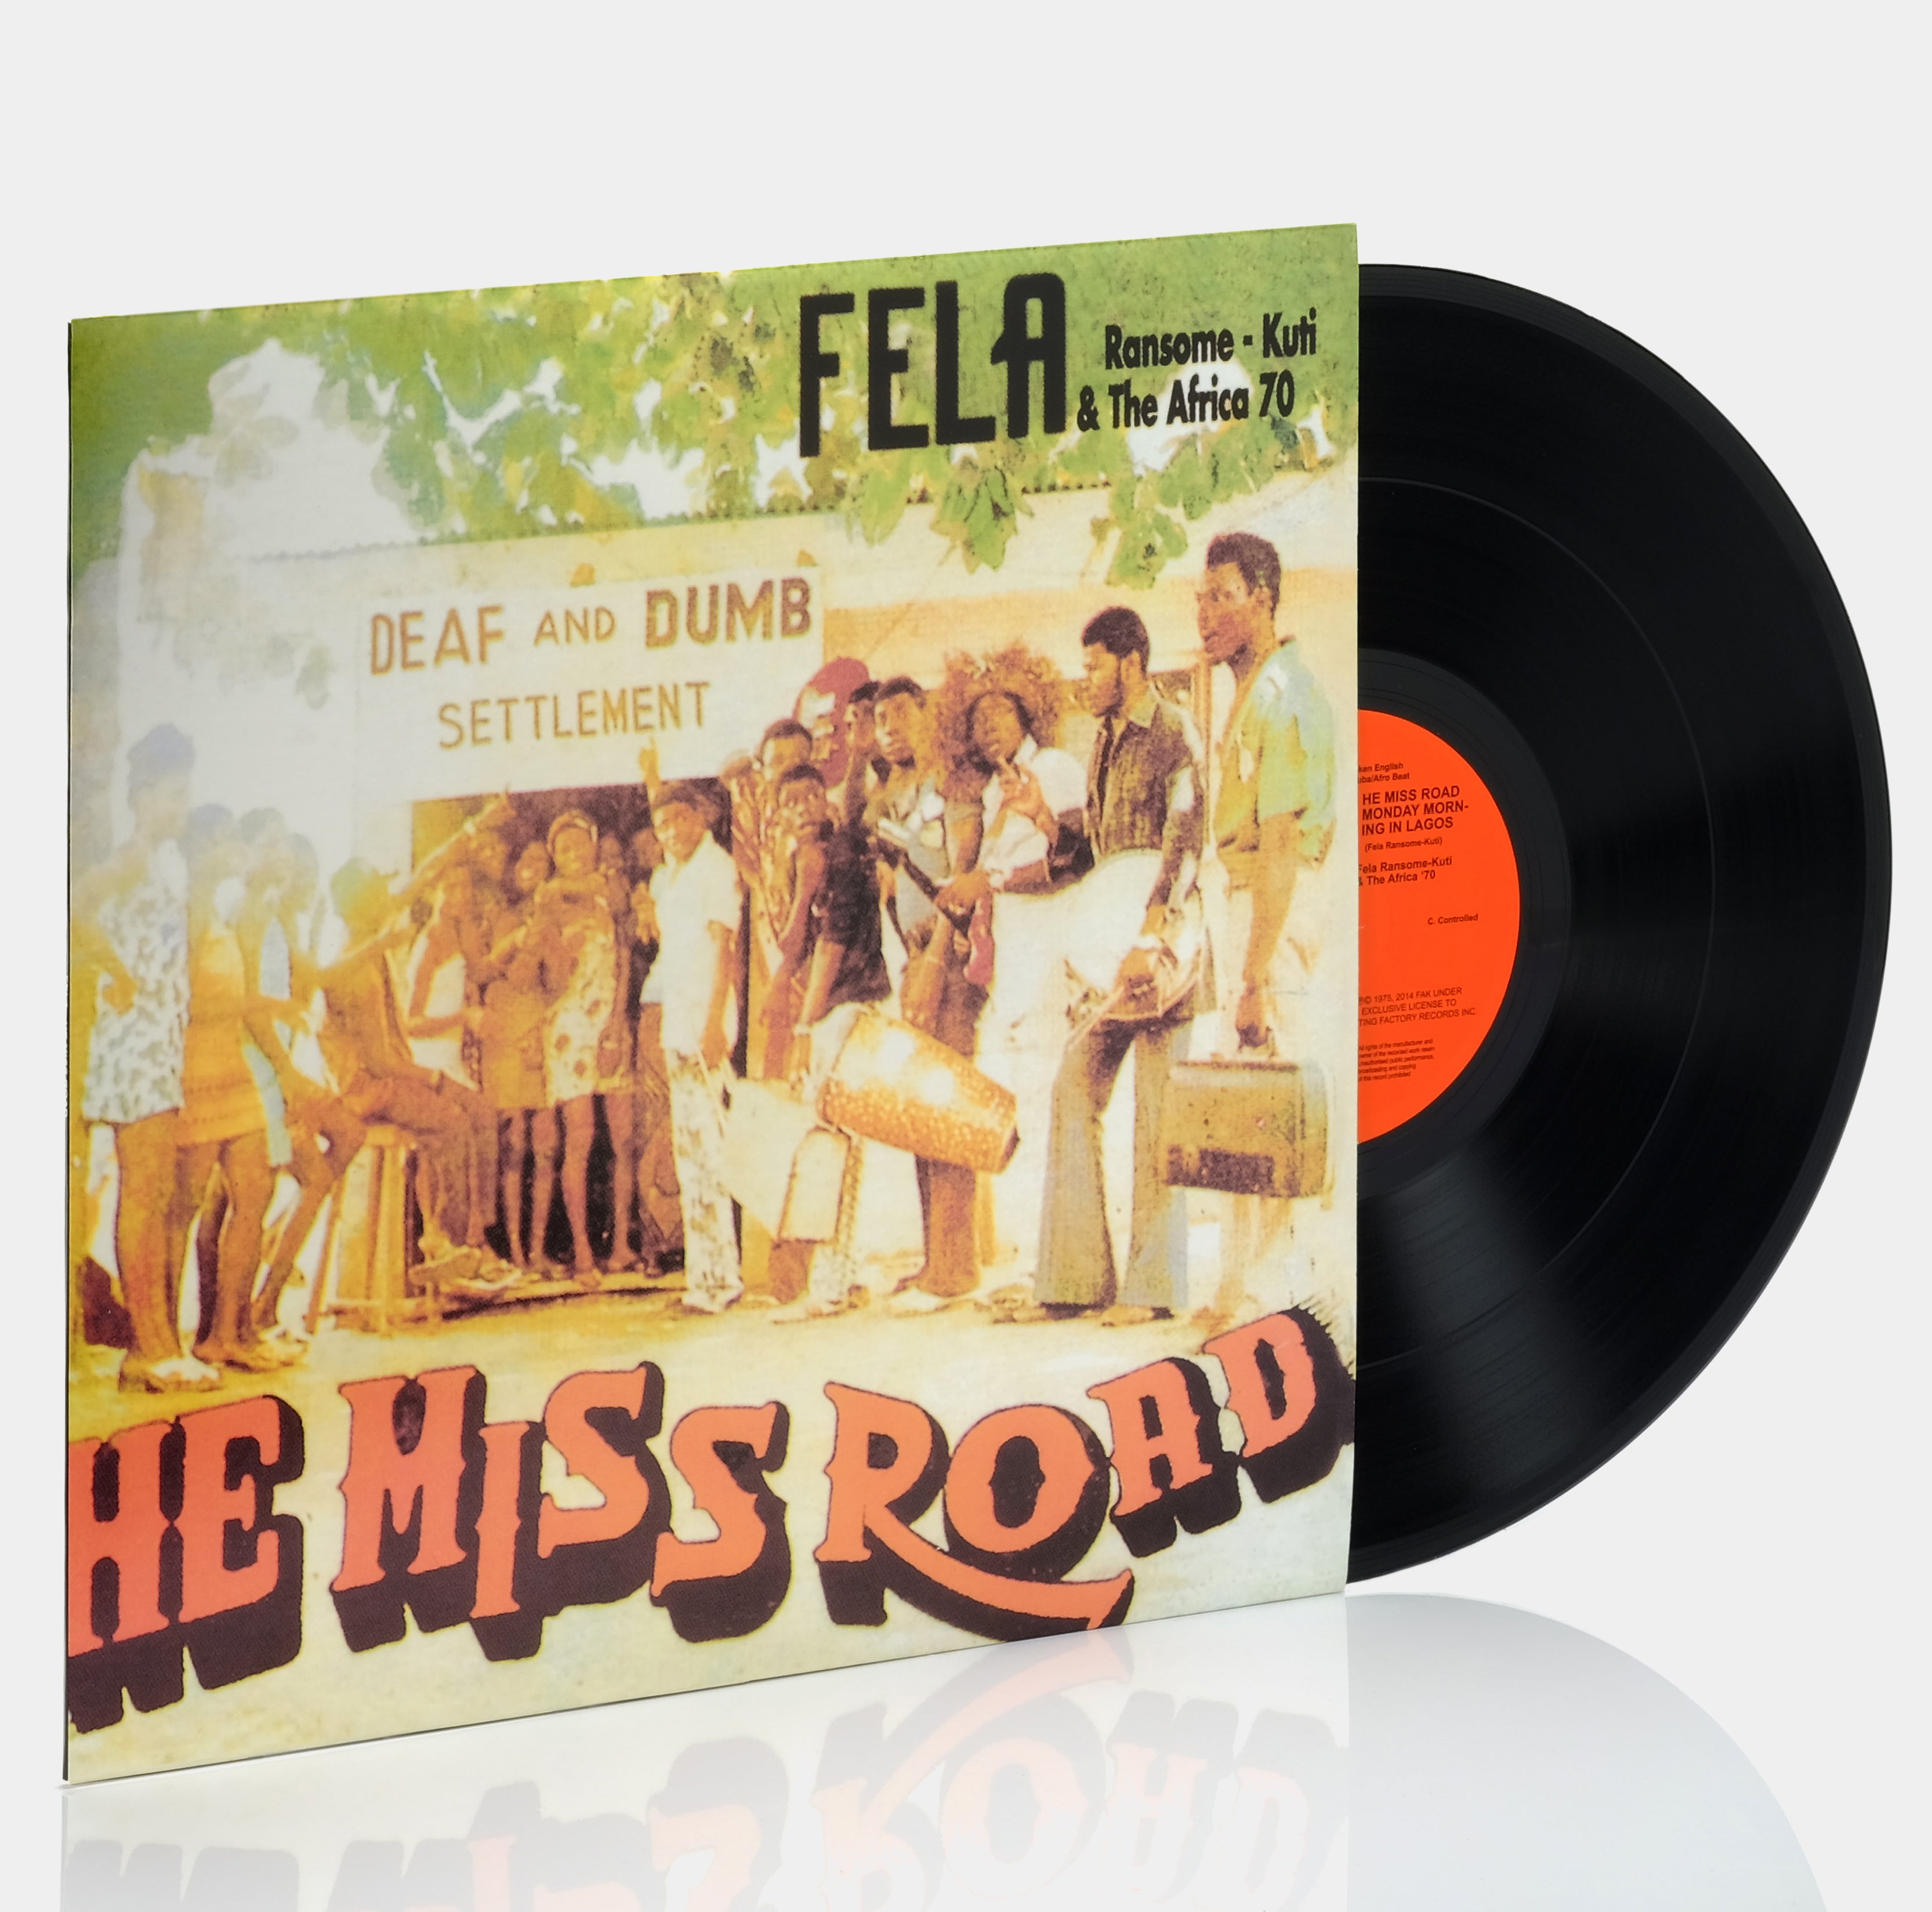 Fela Ransome - Kuti & The Africa 70 - He Miss Road LP Vinyl Record